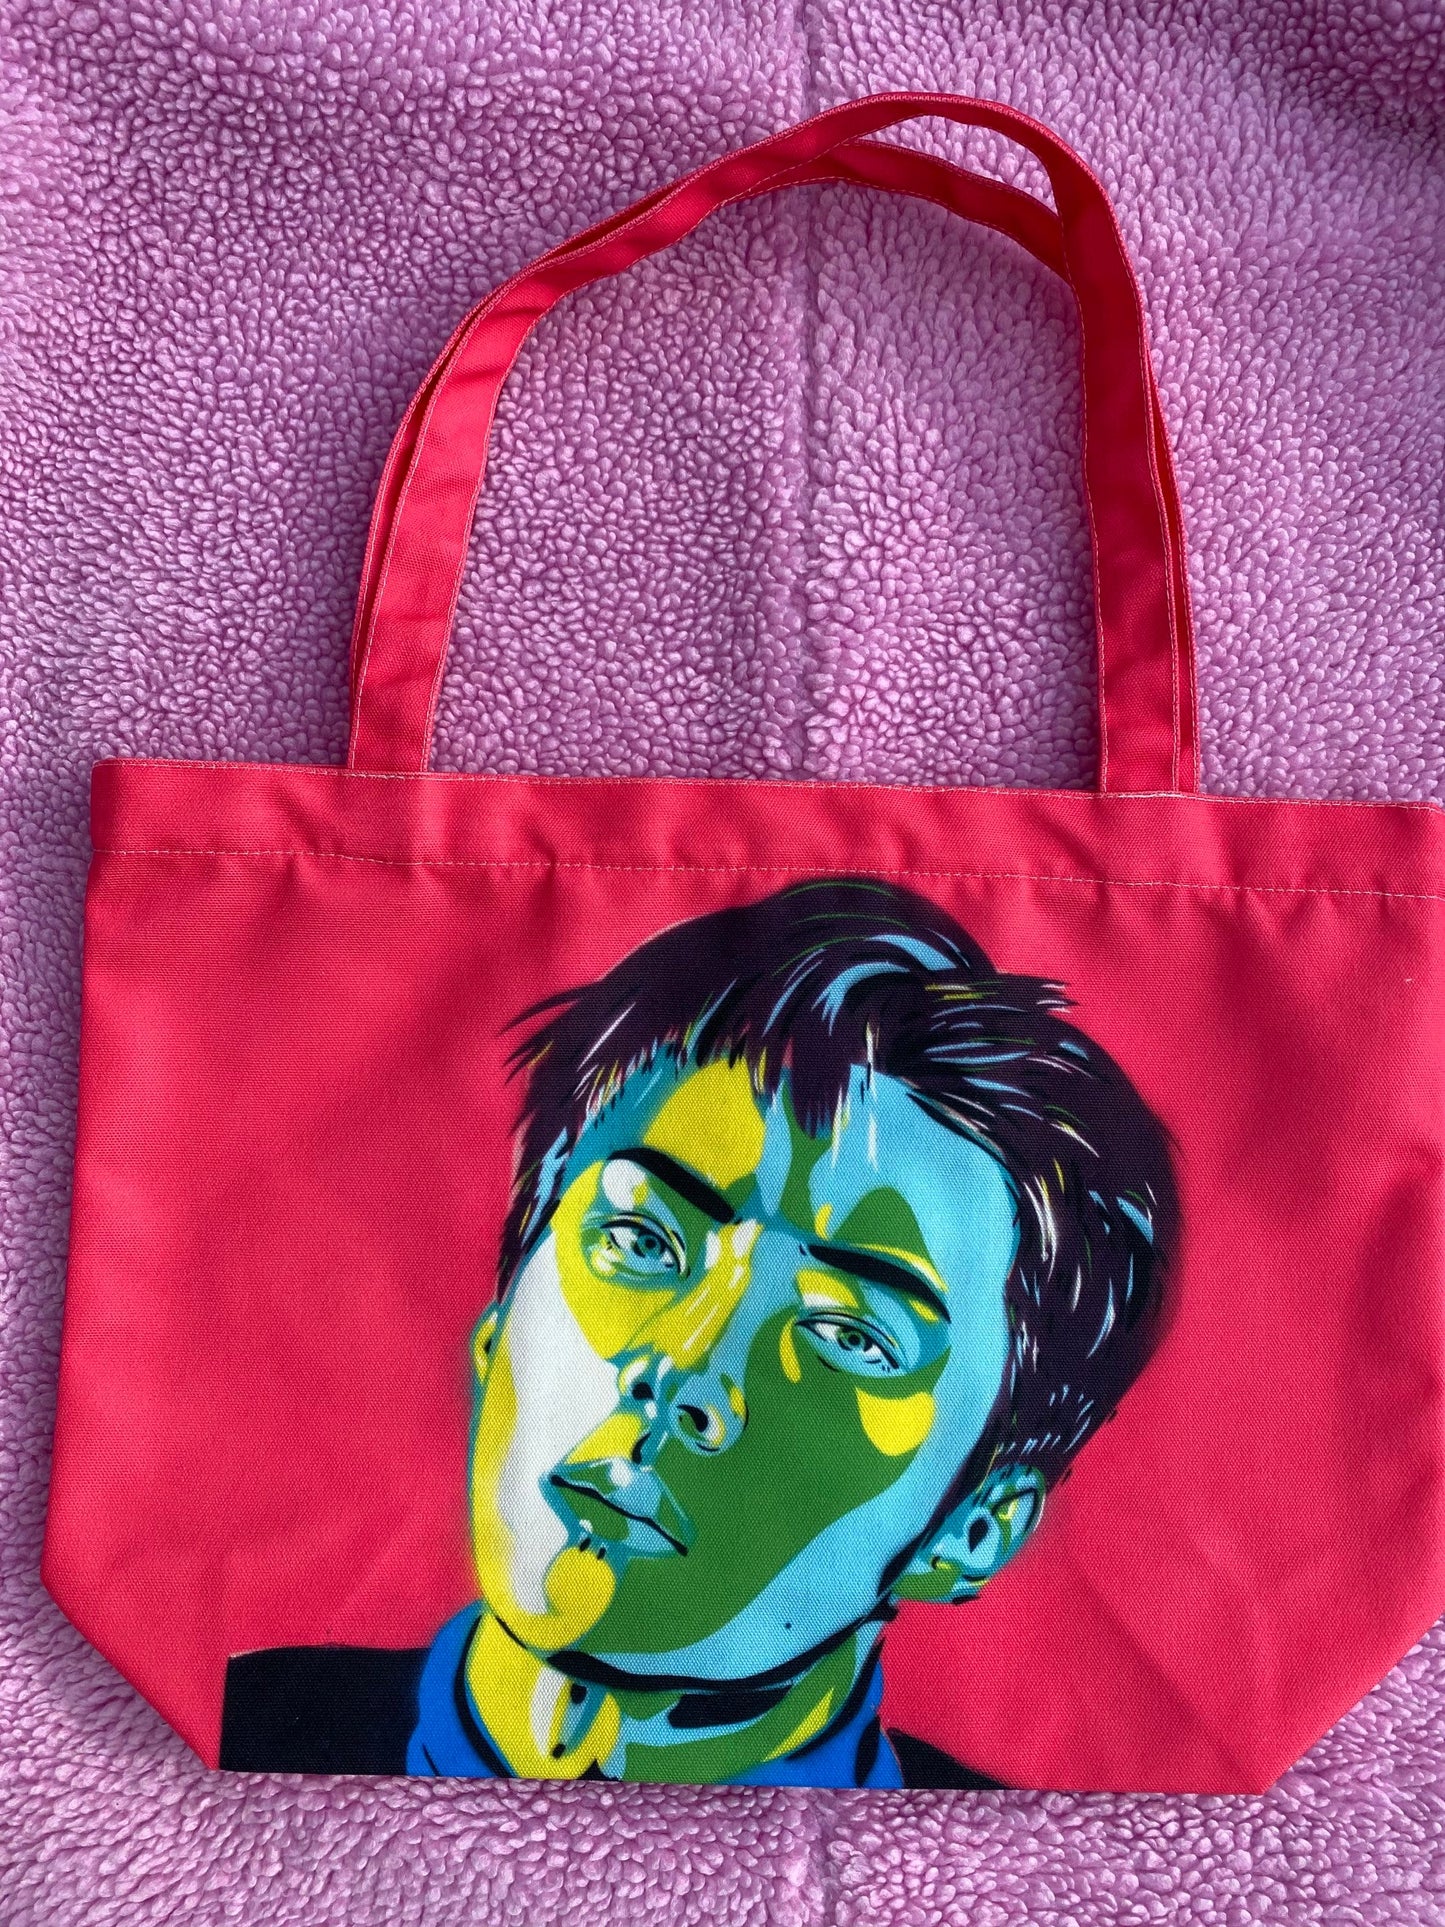 EXO Sehun Inspired Neon Tote Bag